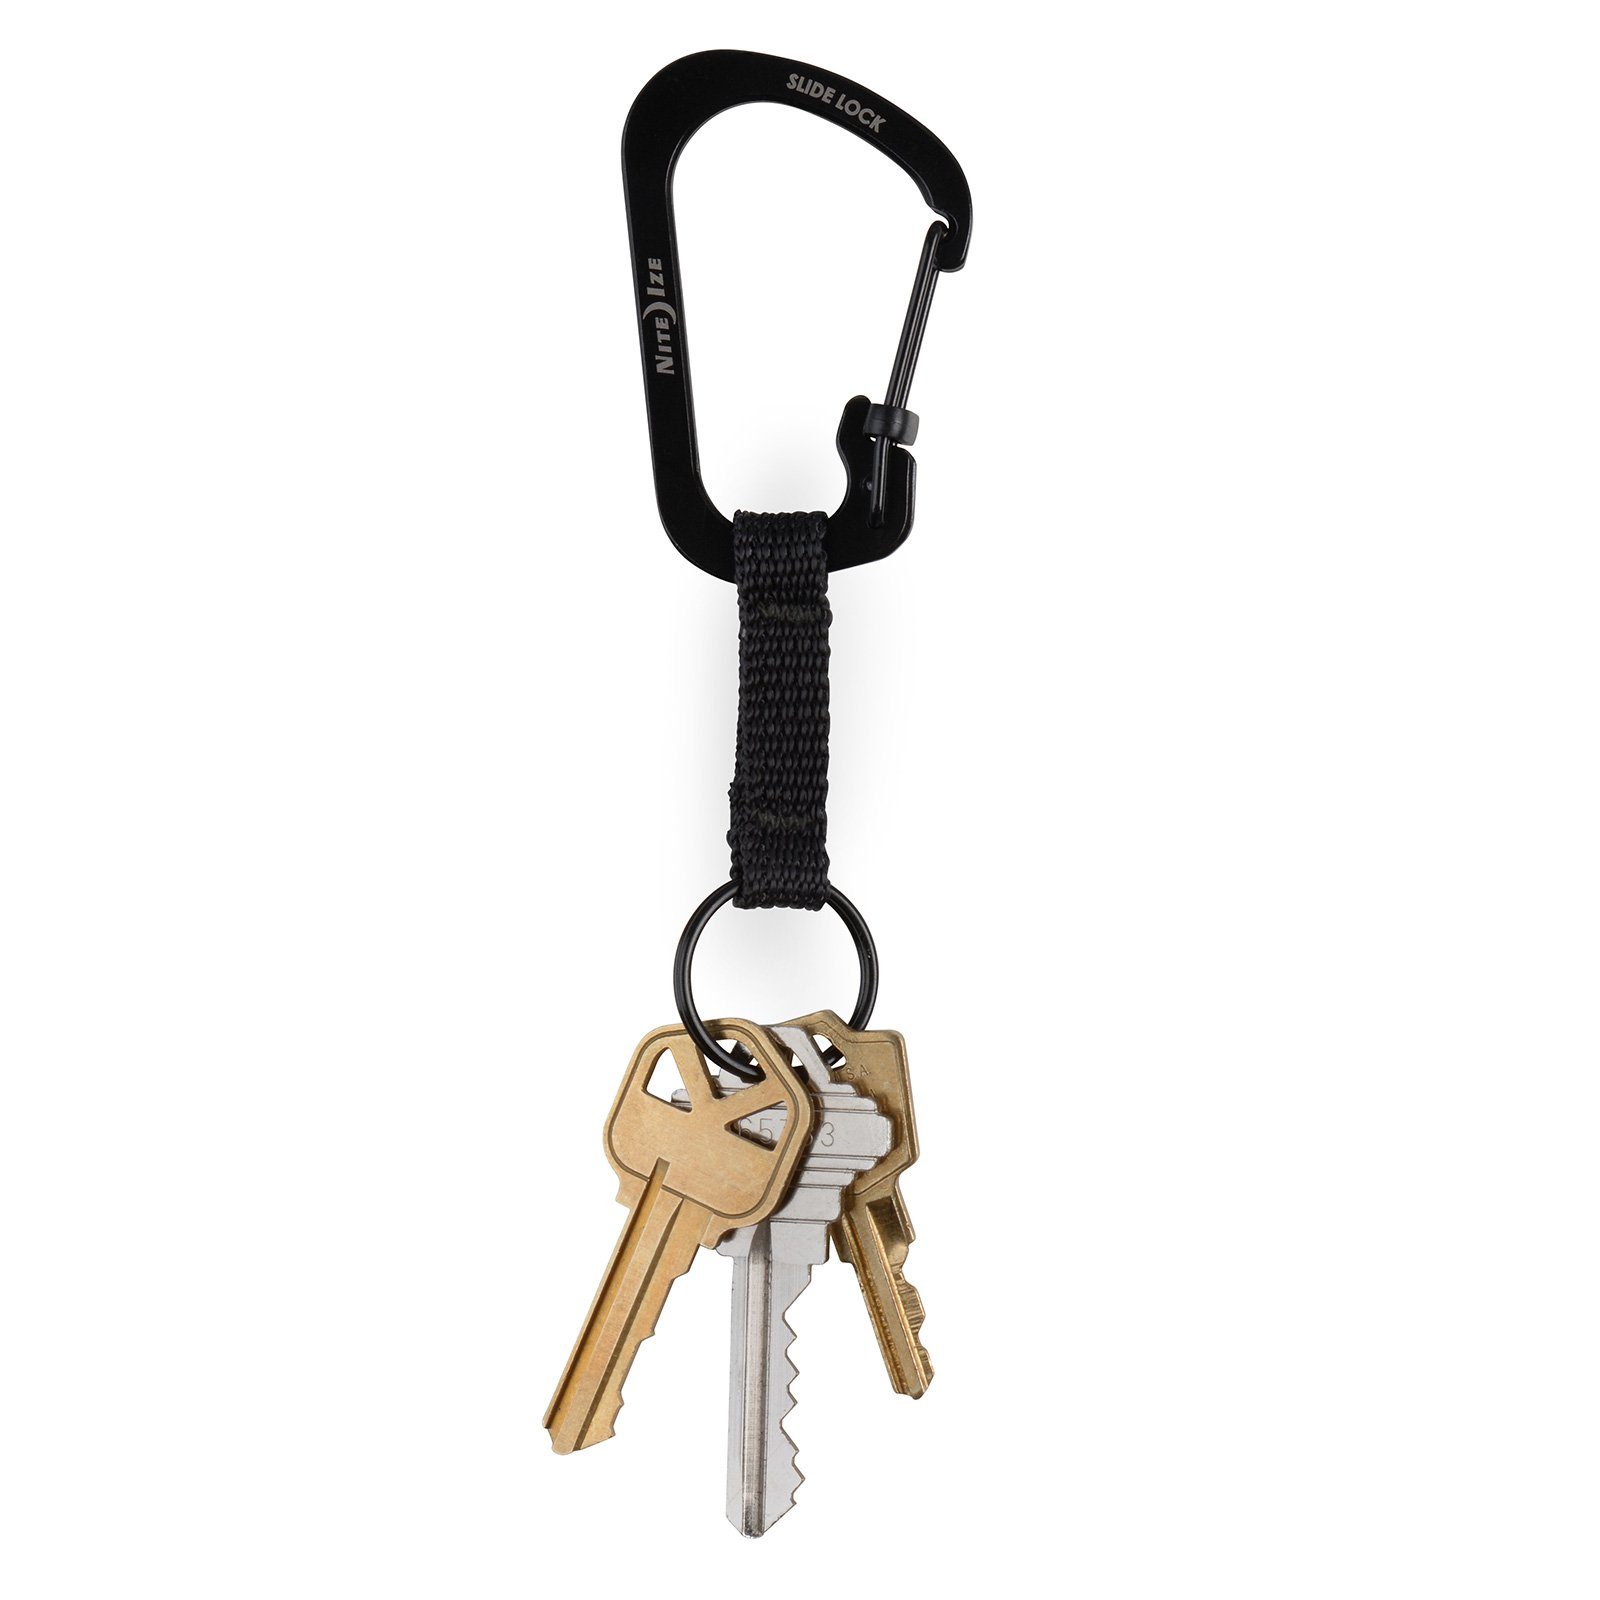 Nite Ize Karabiner SlideLock Key Ring Mini Karabiner Schlüssel Ring, Anhänger Schnapp Haken